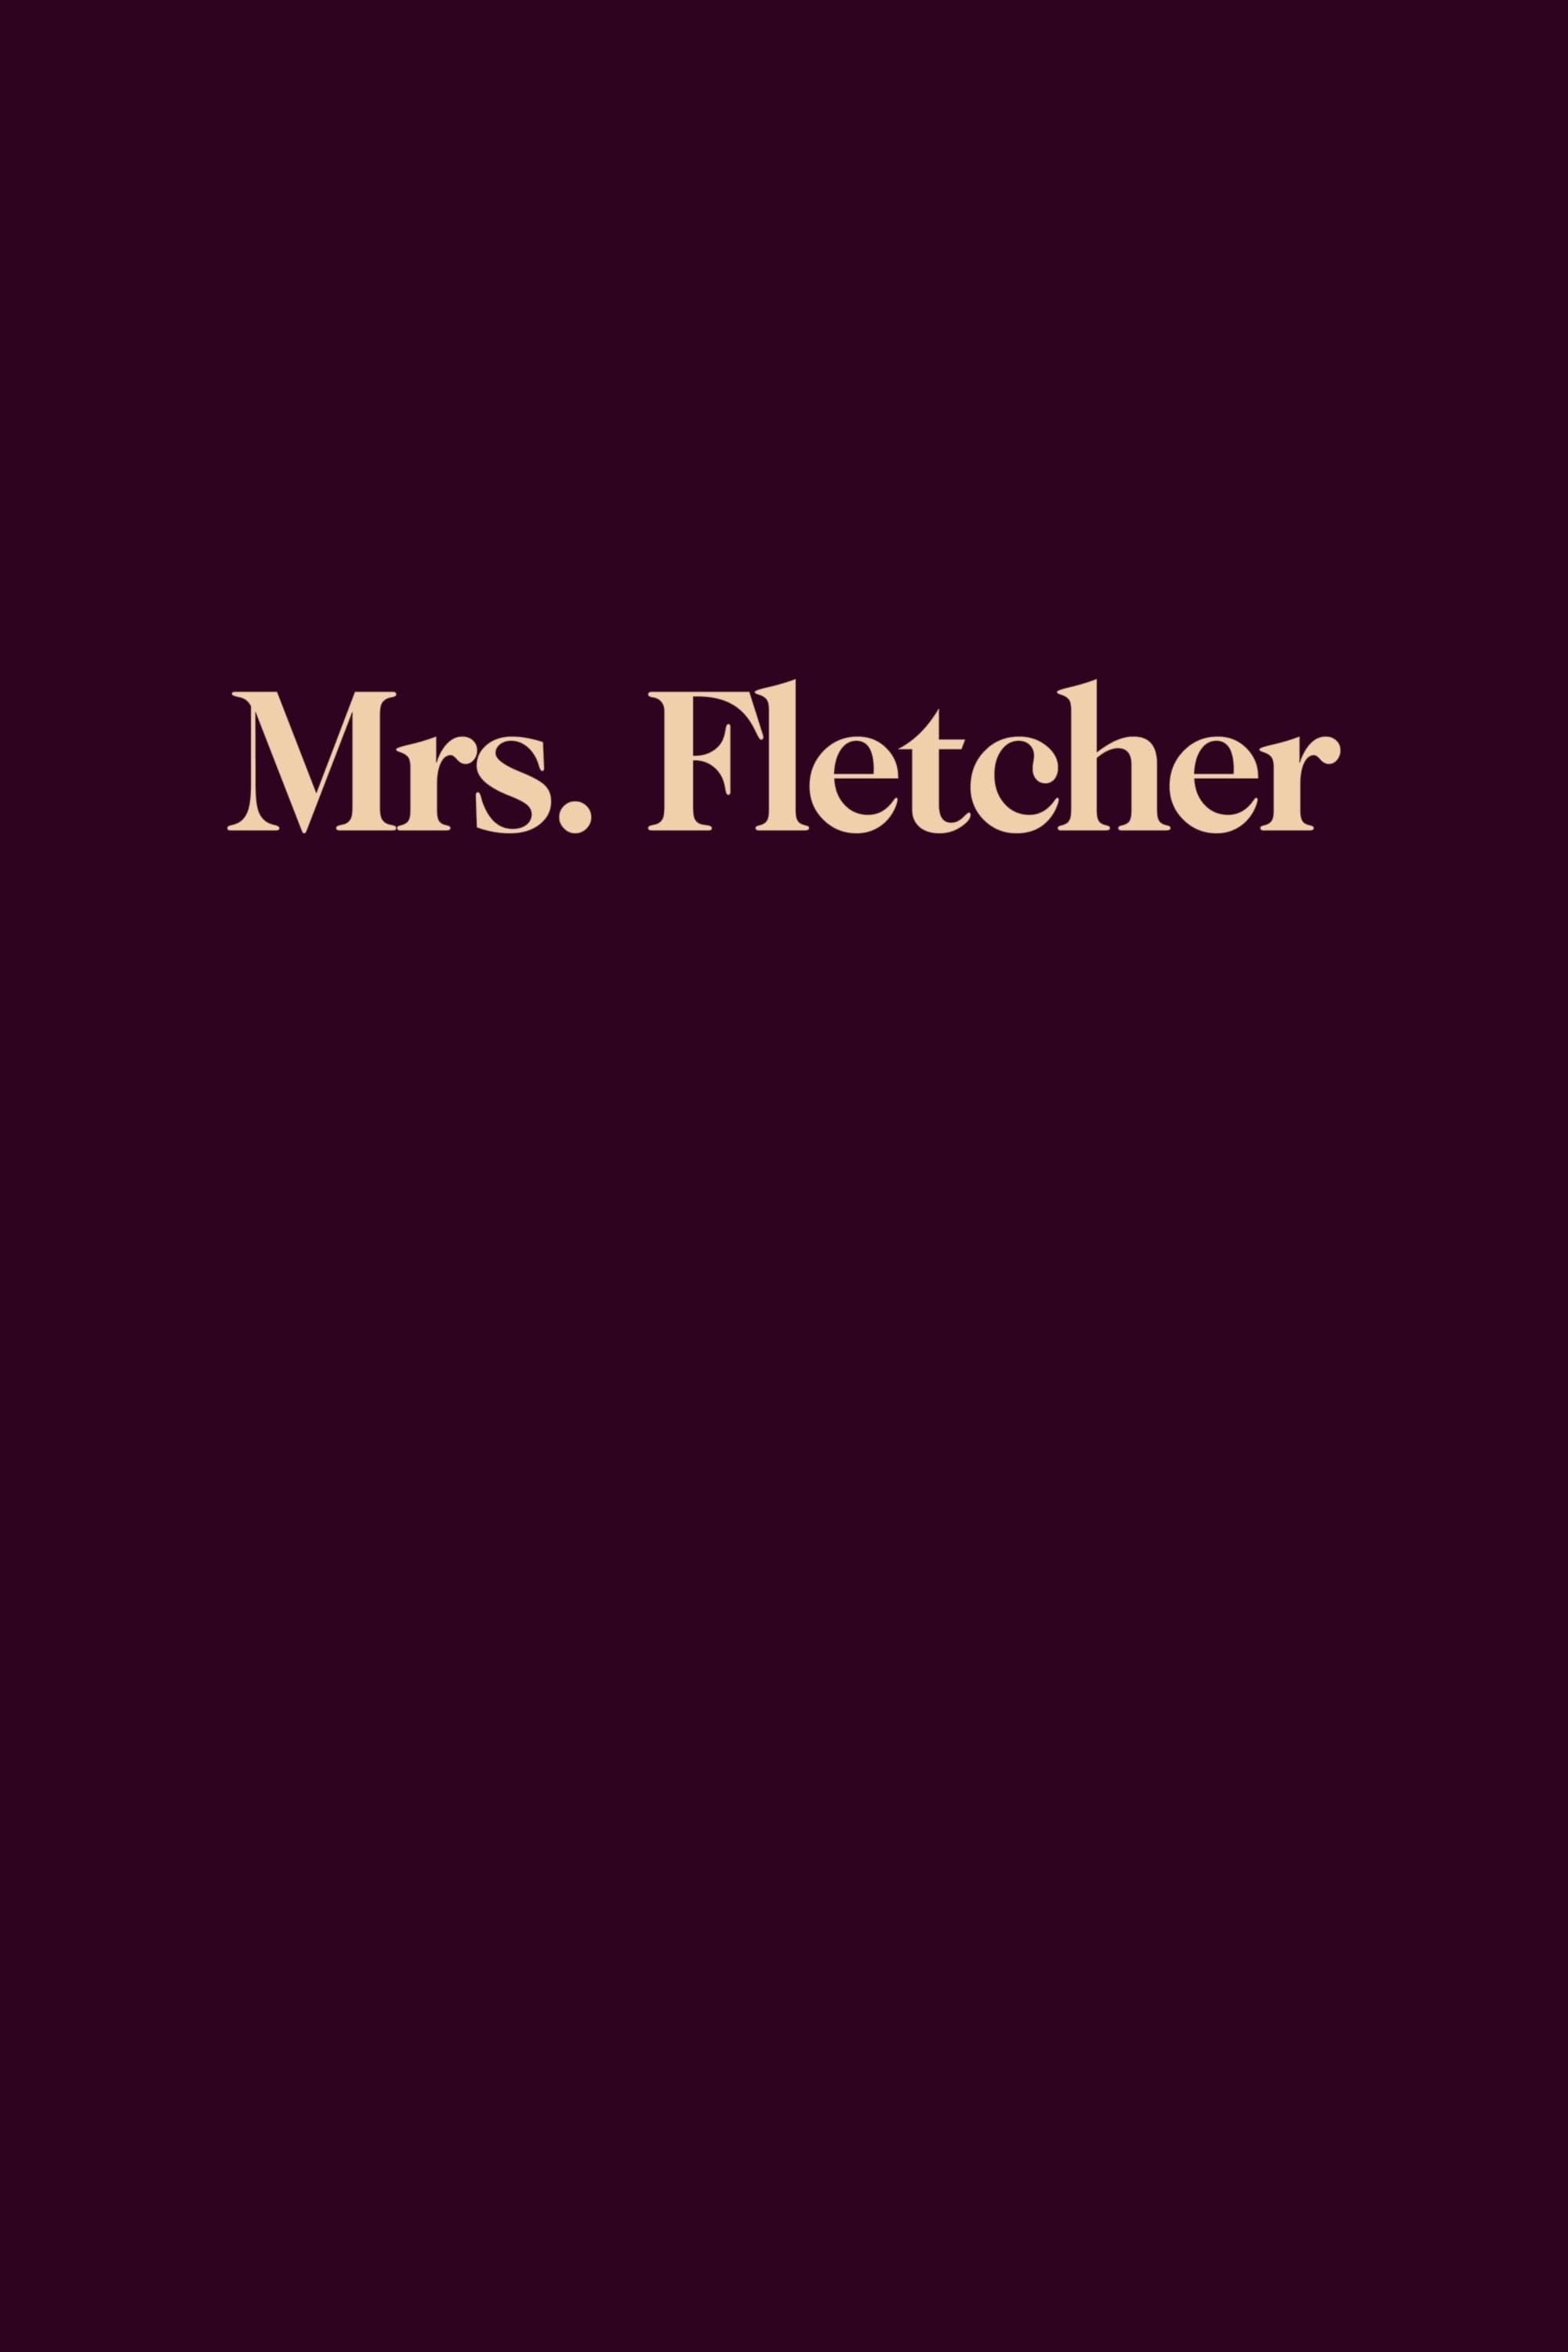 Mrs. Fletcher poster